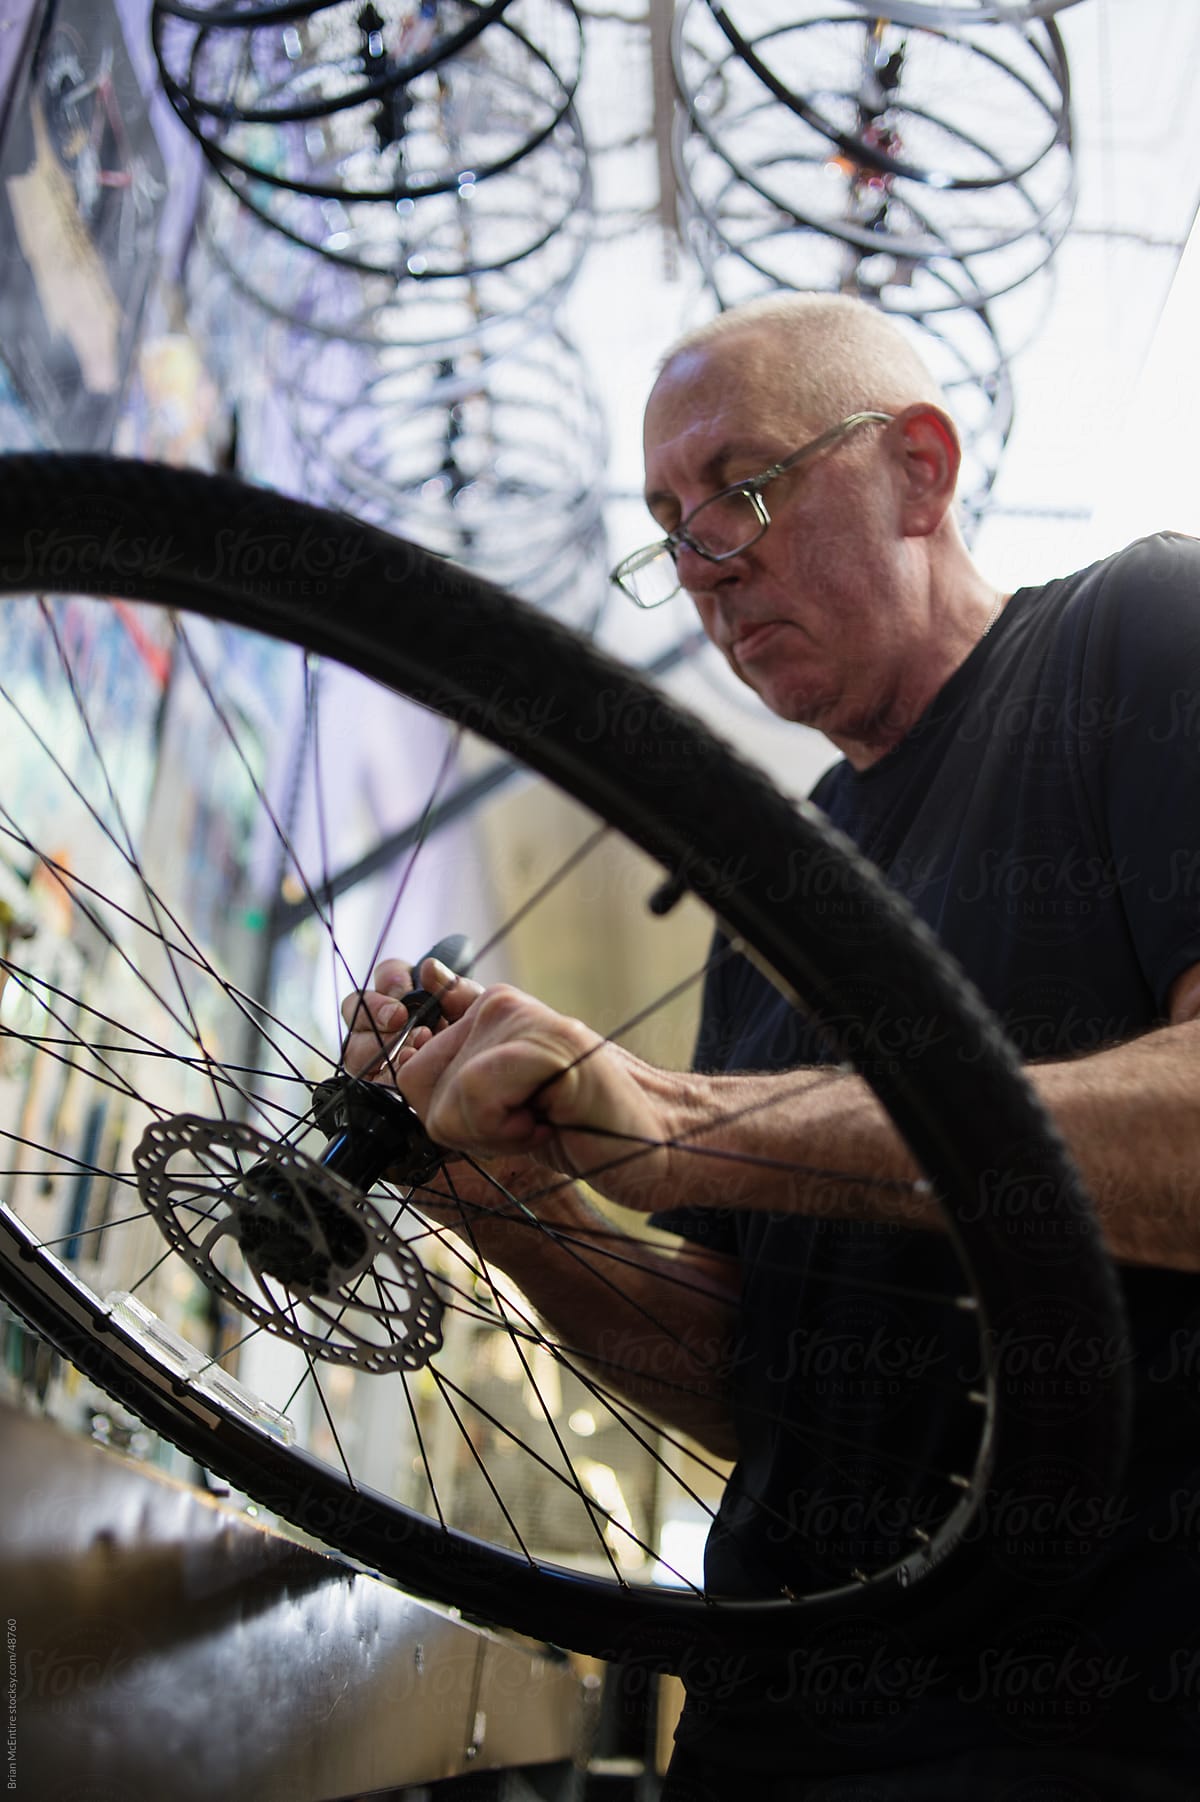 Local Bike Shop: Mechanic Adjusts Wheel Hub